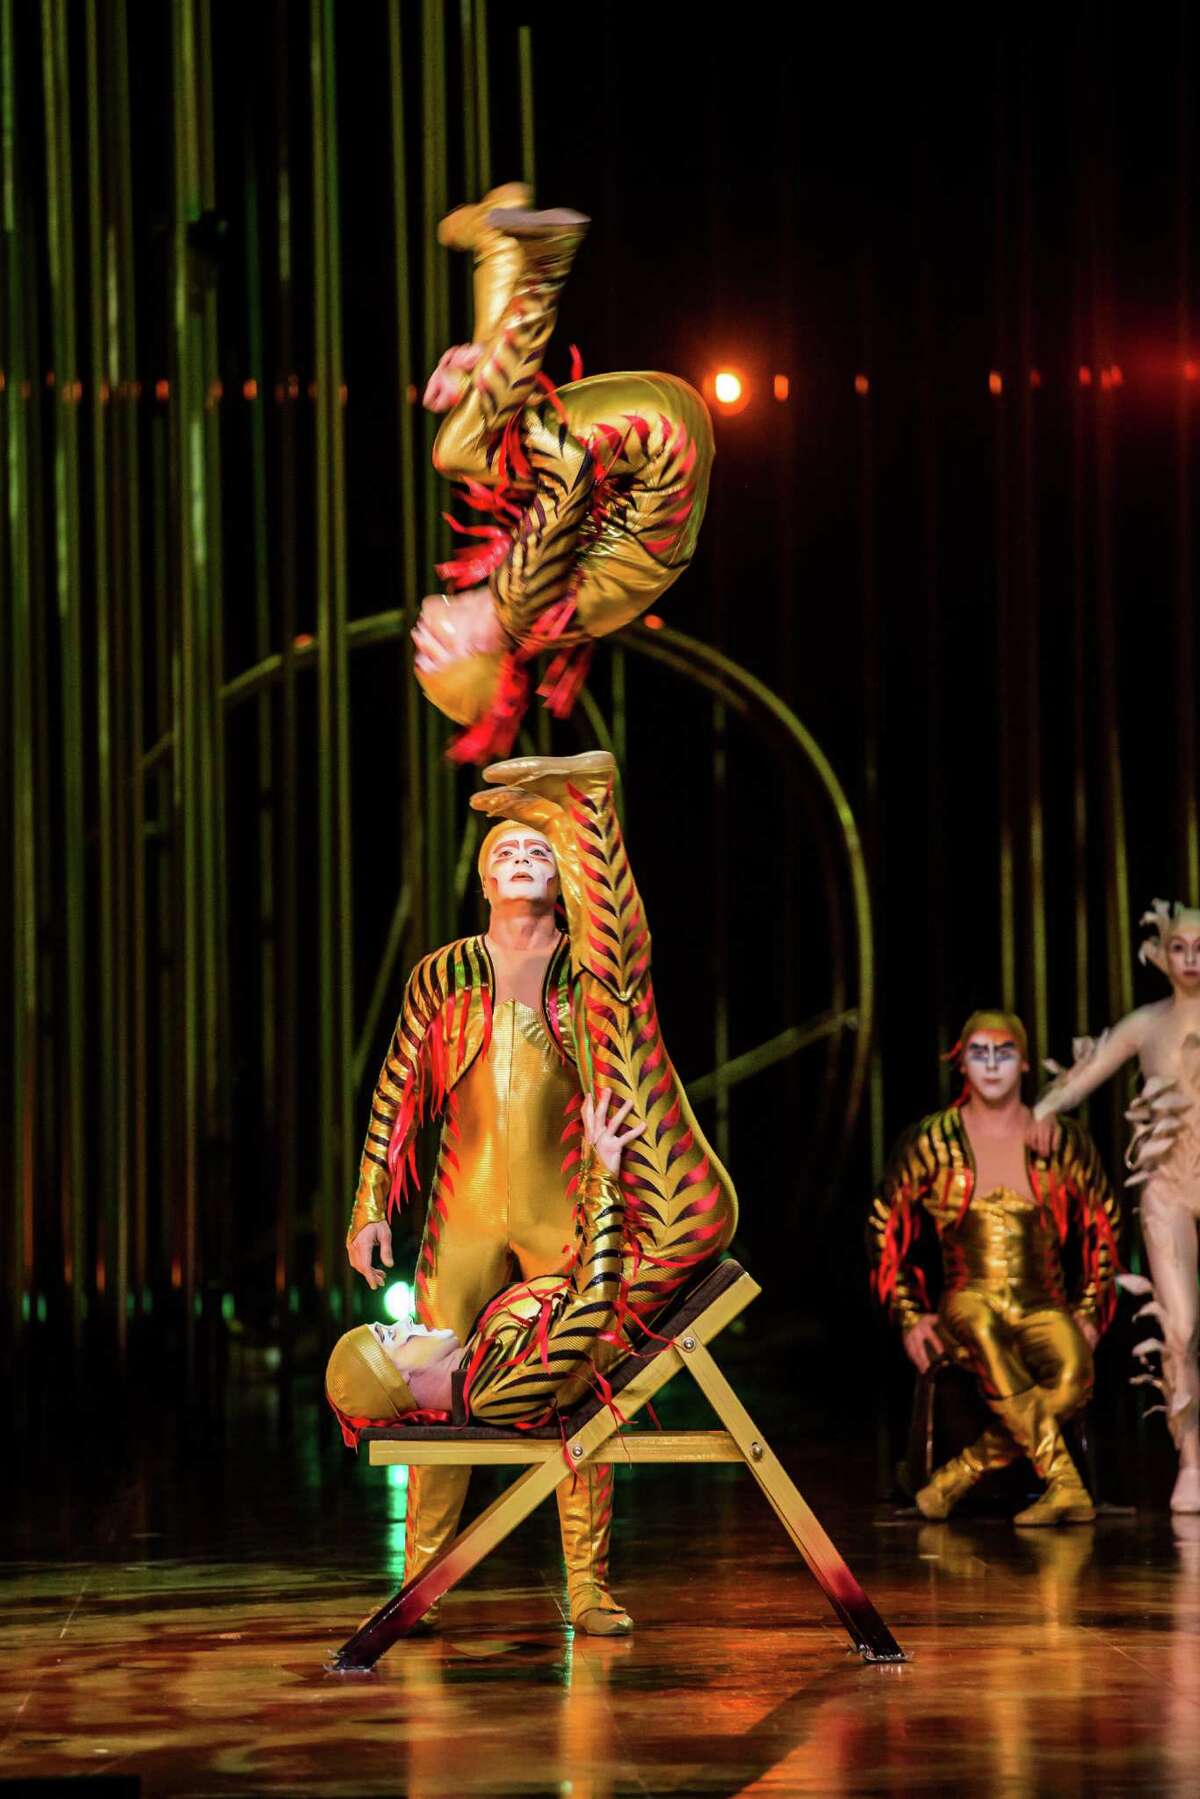 Photos from Cirque du Soleil's "Varekai."